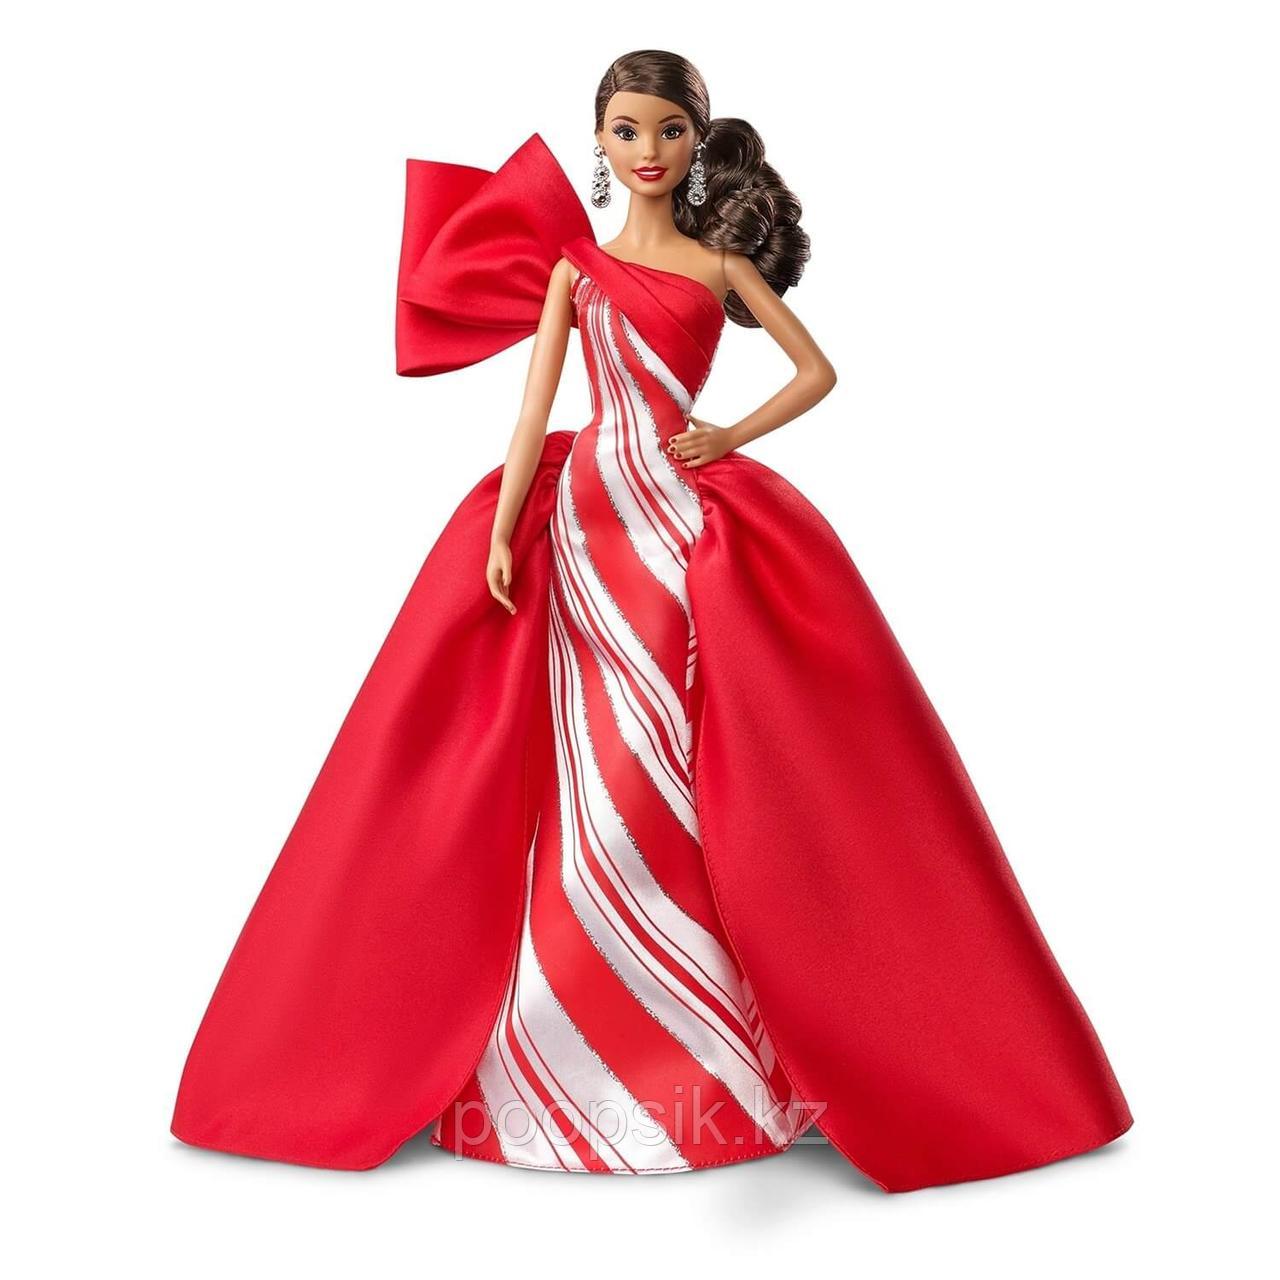 Кукла Barbie 2019 Праздничная Брюнетка FXF03